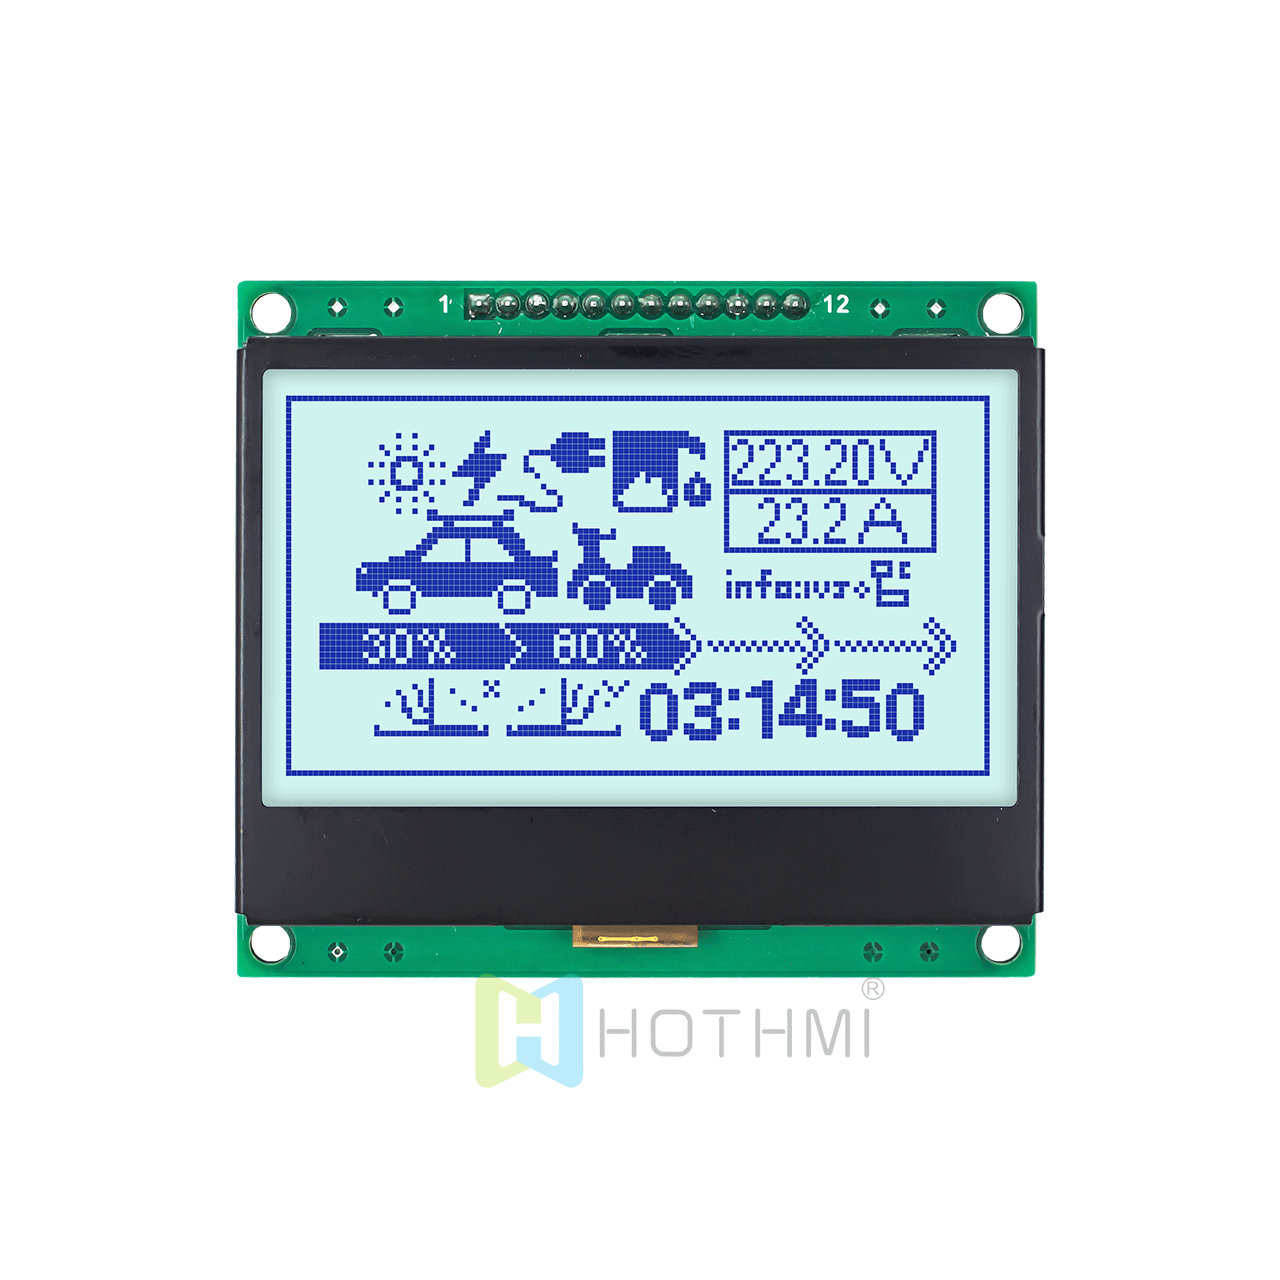 128x64 Graphic LCD Display Module | 3 Inch Graphic LCD Display Module | 128x64 Graphic LCD Module | 3.3V | Blue on Gray | STN + White Backlight | Adruino